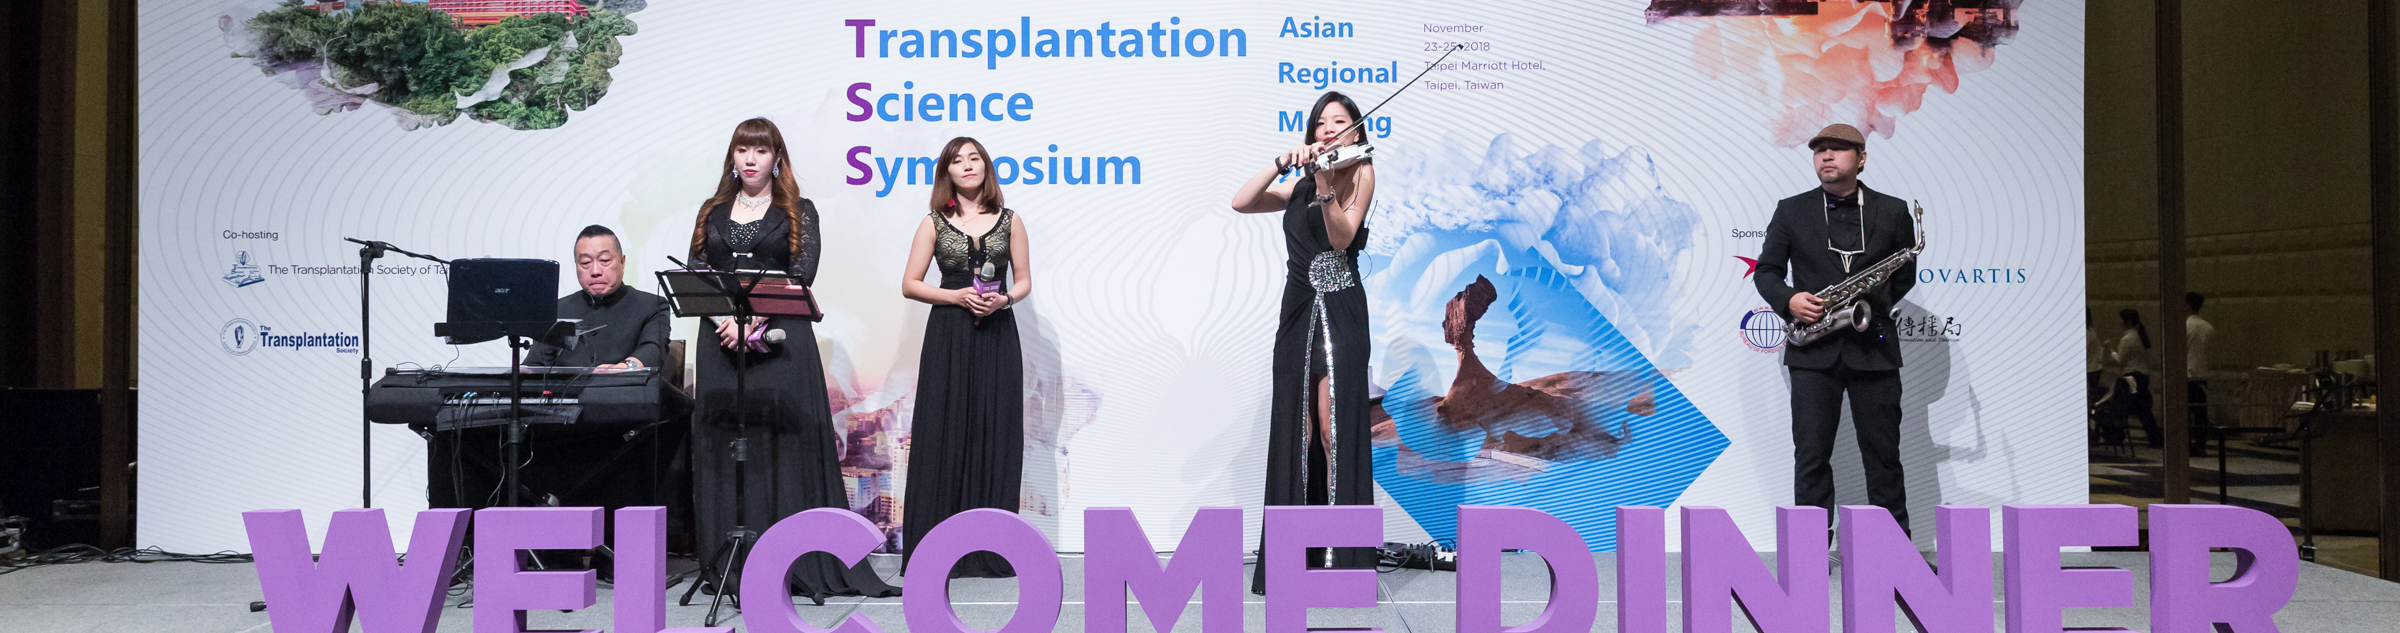 Transplantation Science Symposium Asian Regional Meeting 2018